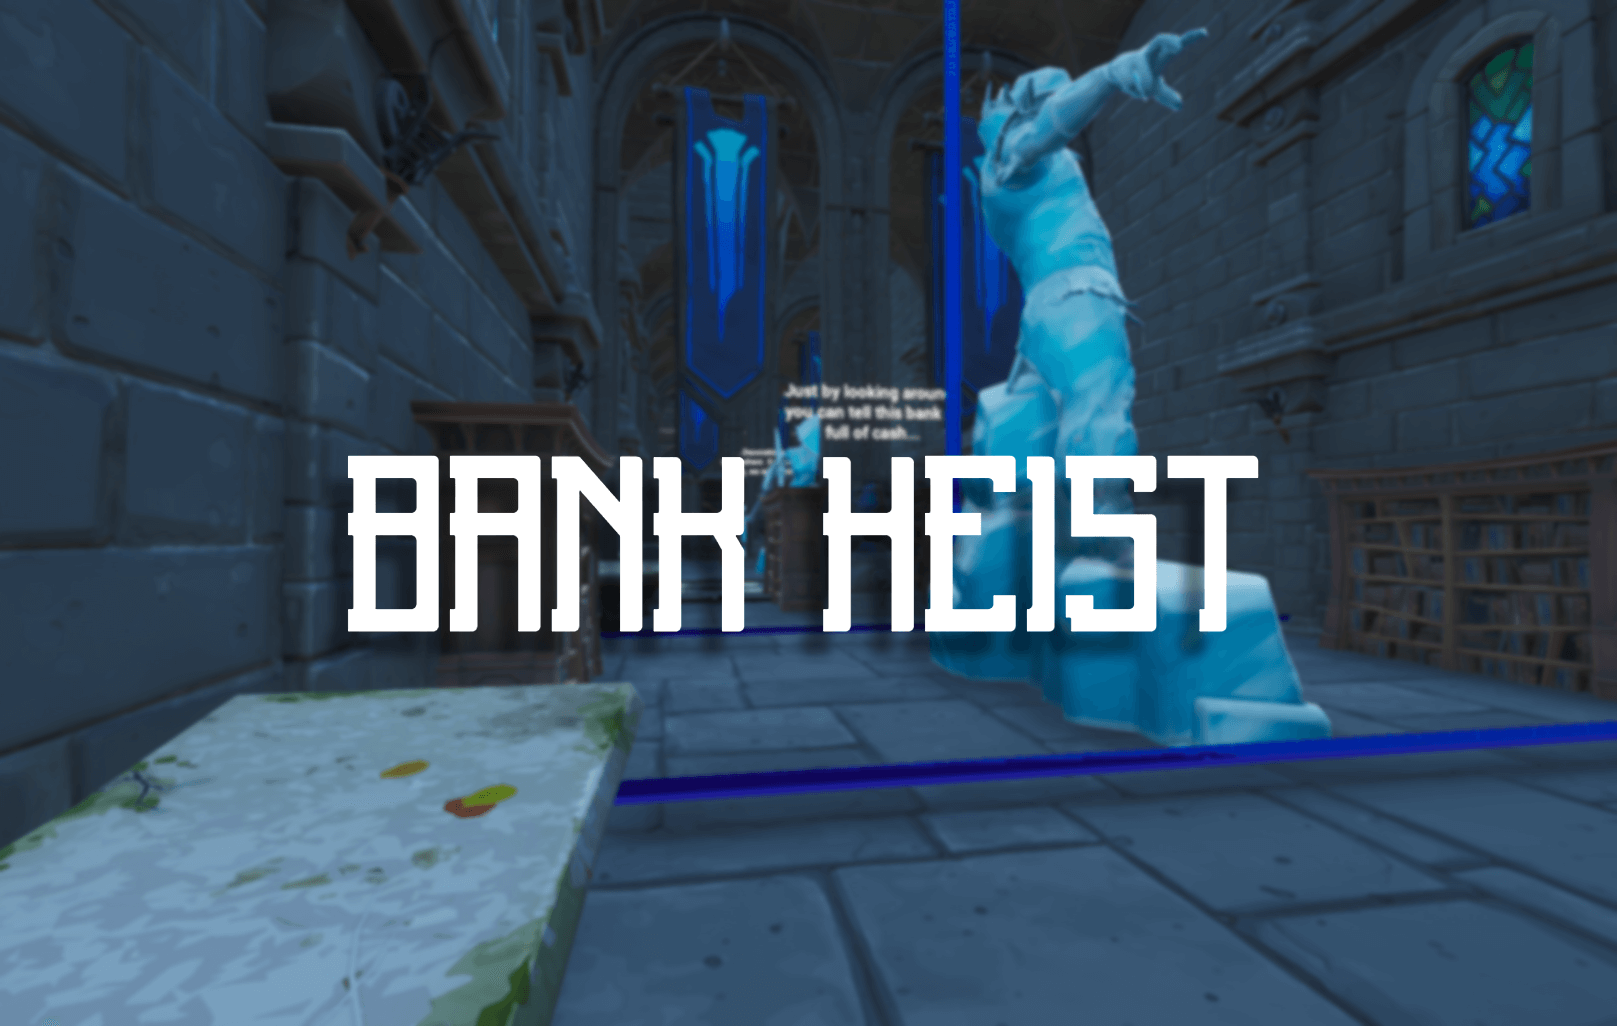 Bank Heist Fortnite Creative Escape And Adventure Map Code